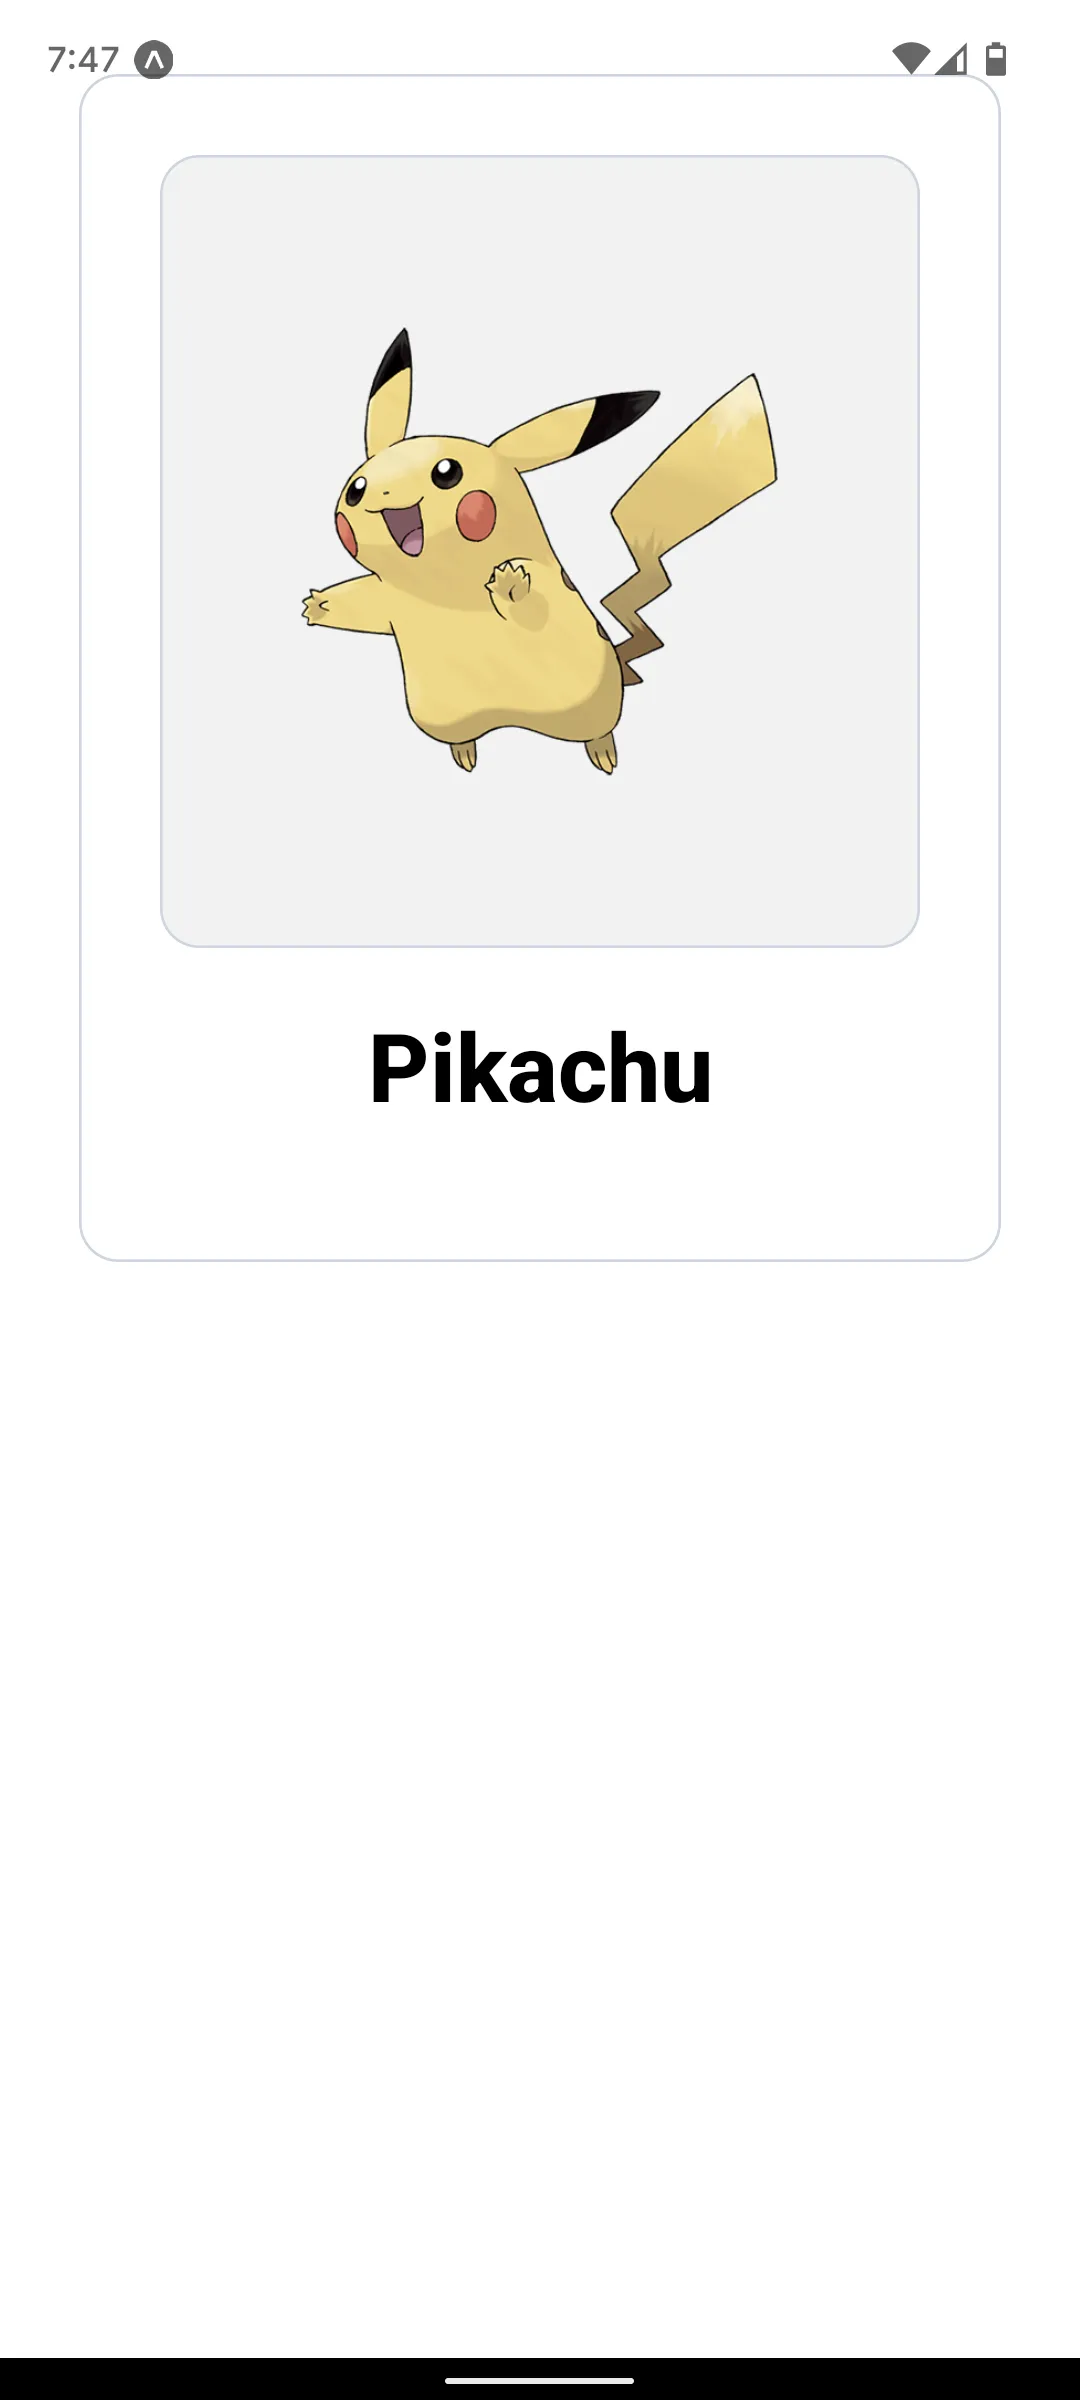 A Pikachu preview
card